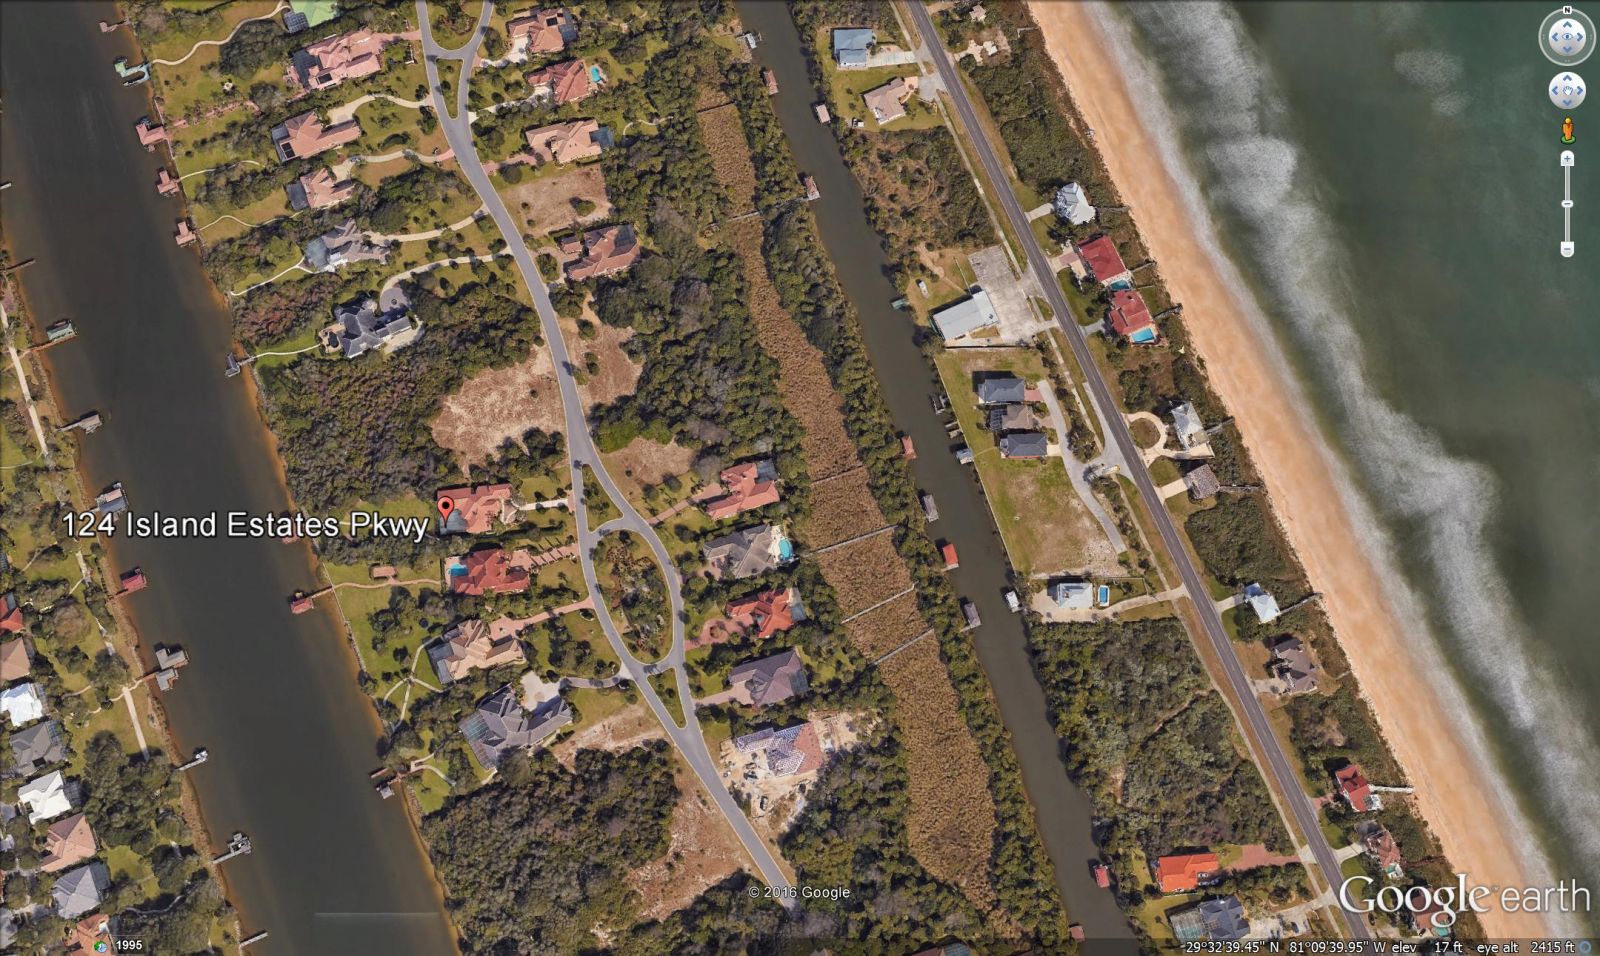 124 Island Estates Pkwy - Google Earth 2016